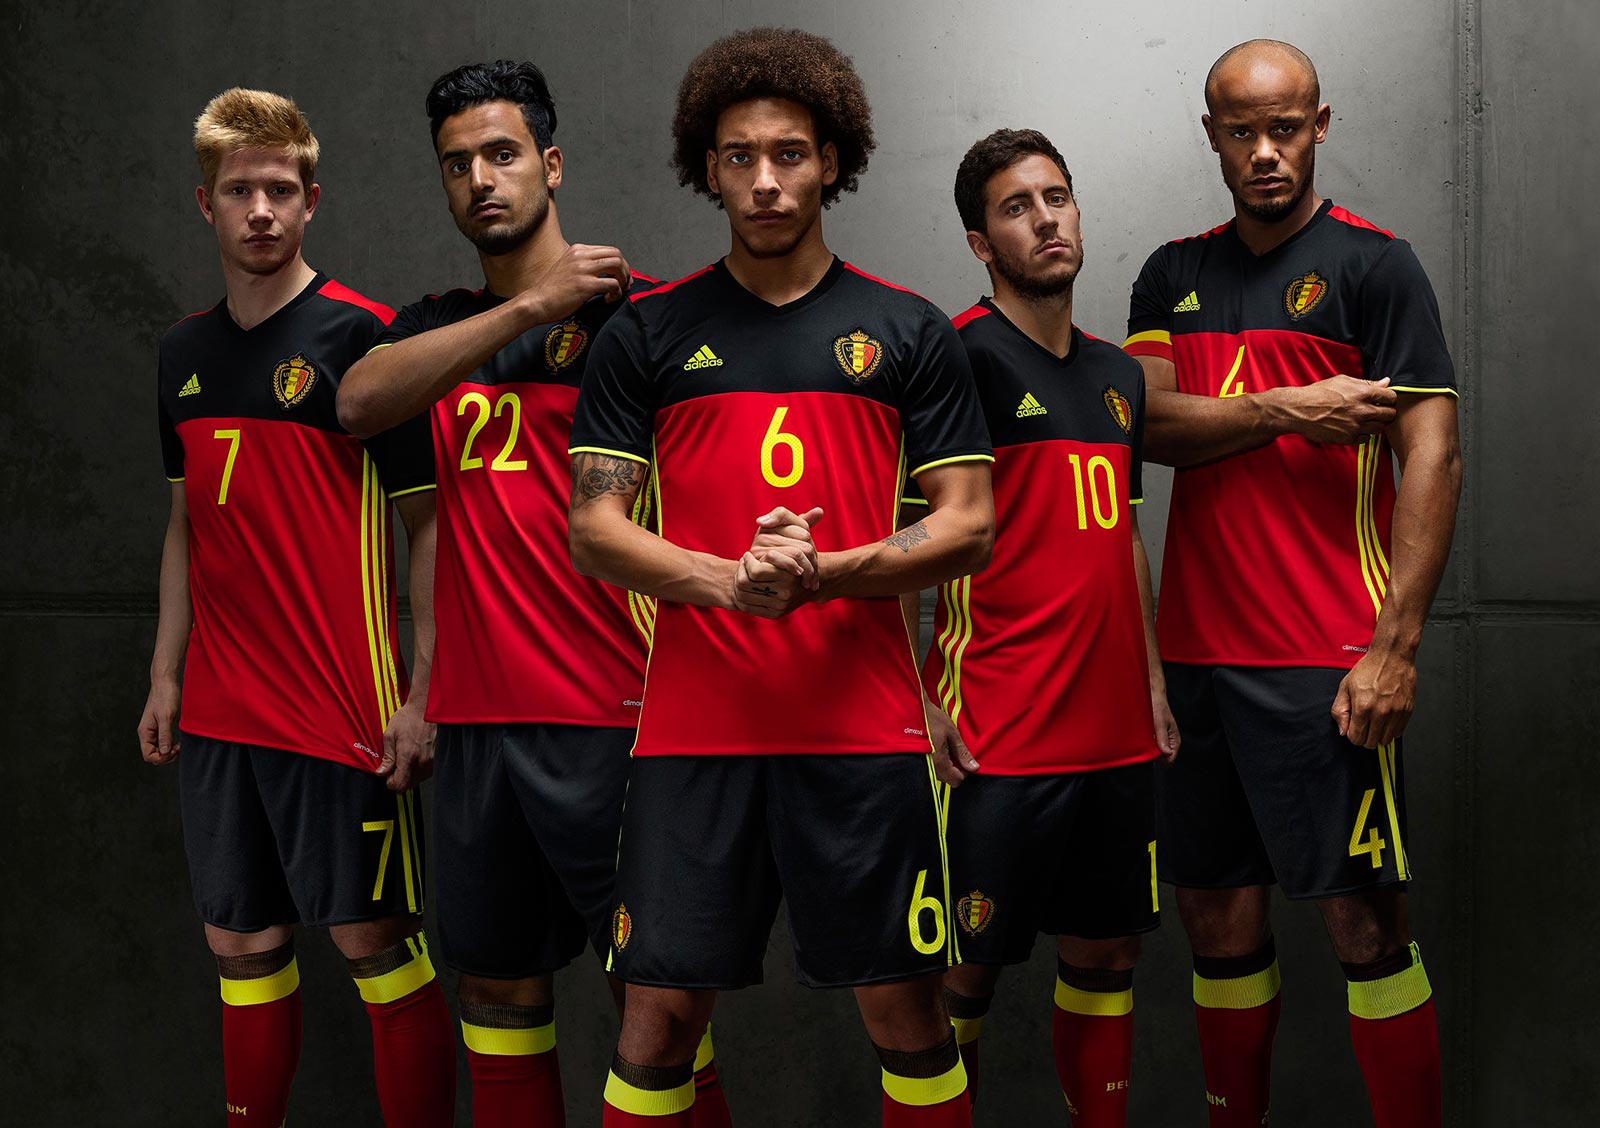 Belgium's iconic soccer rivalries' kits